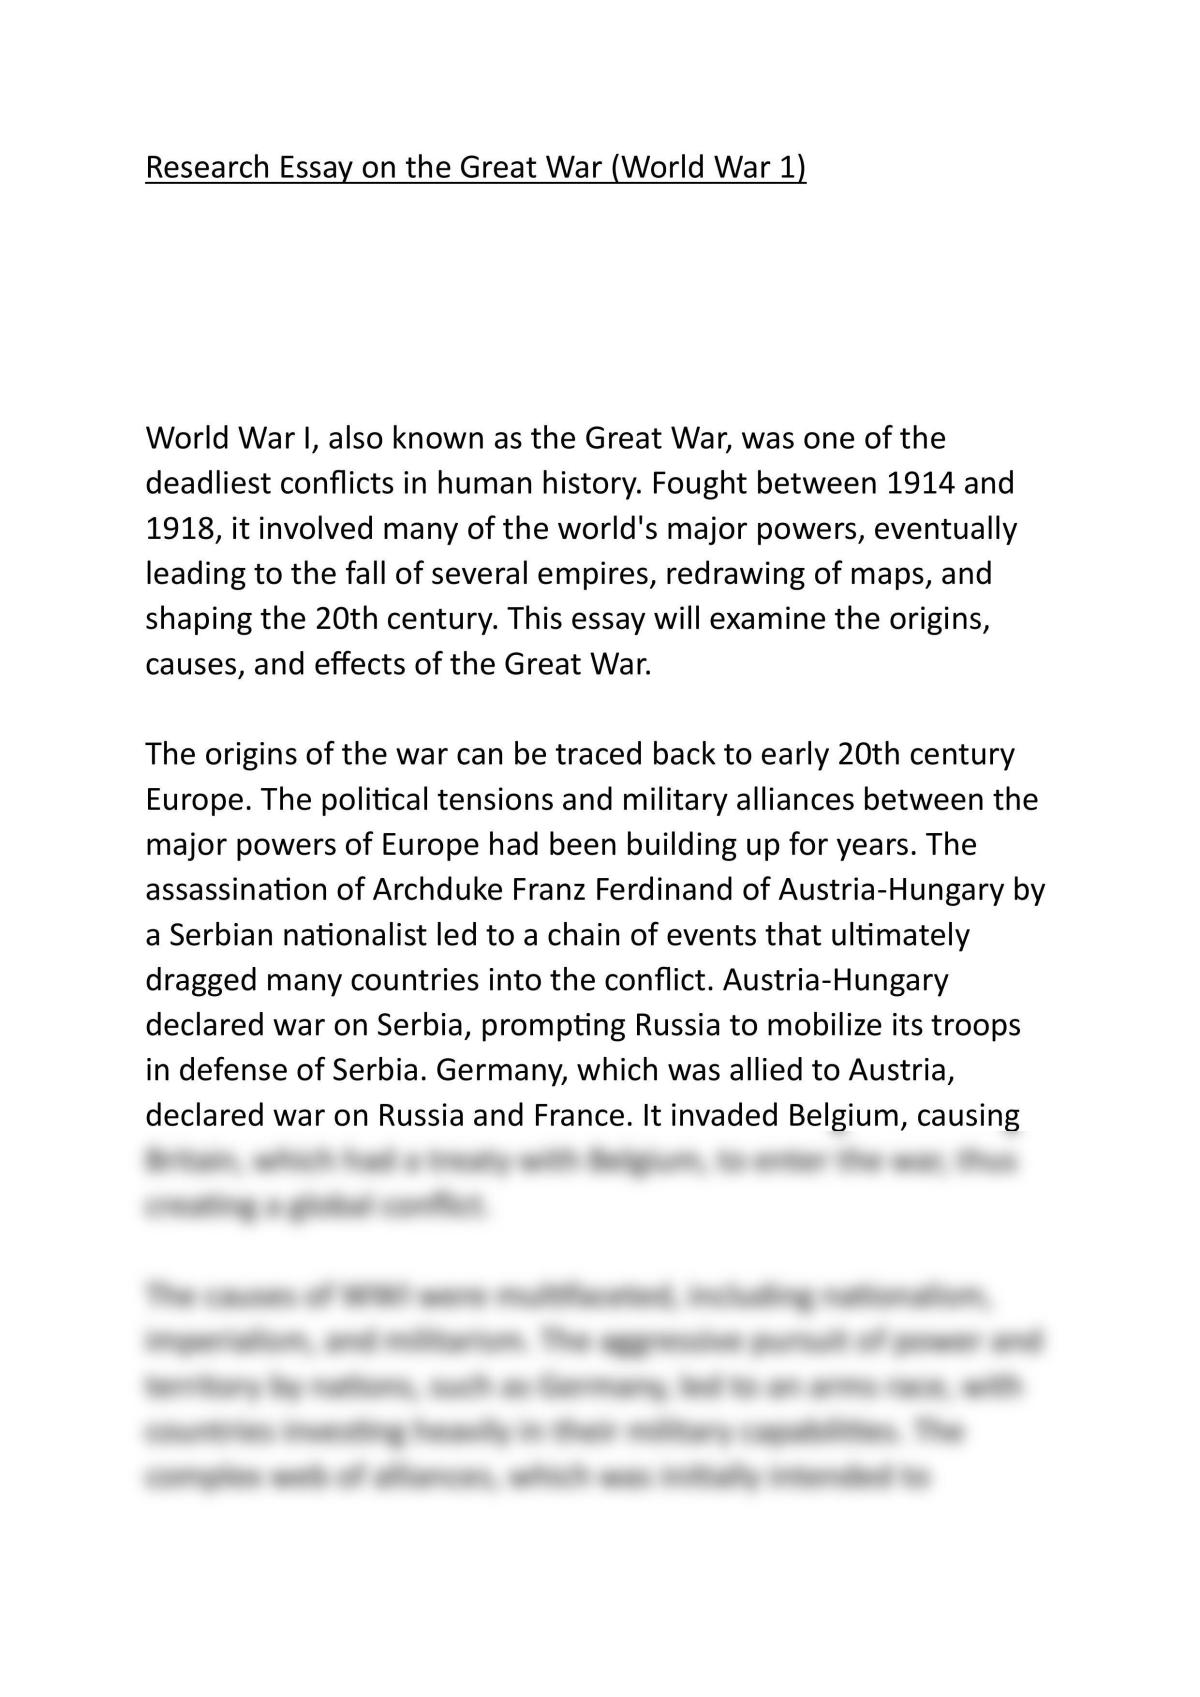 world war 1 history essay